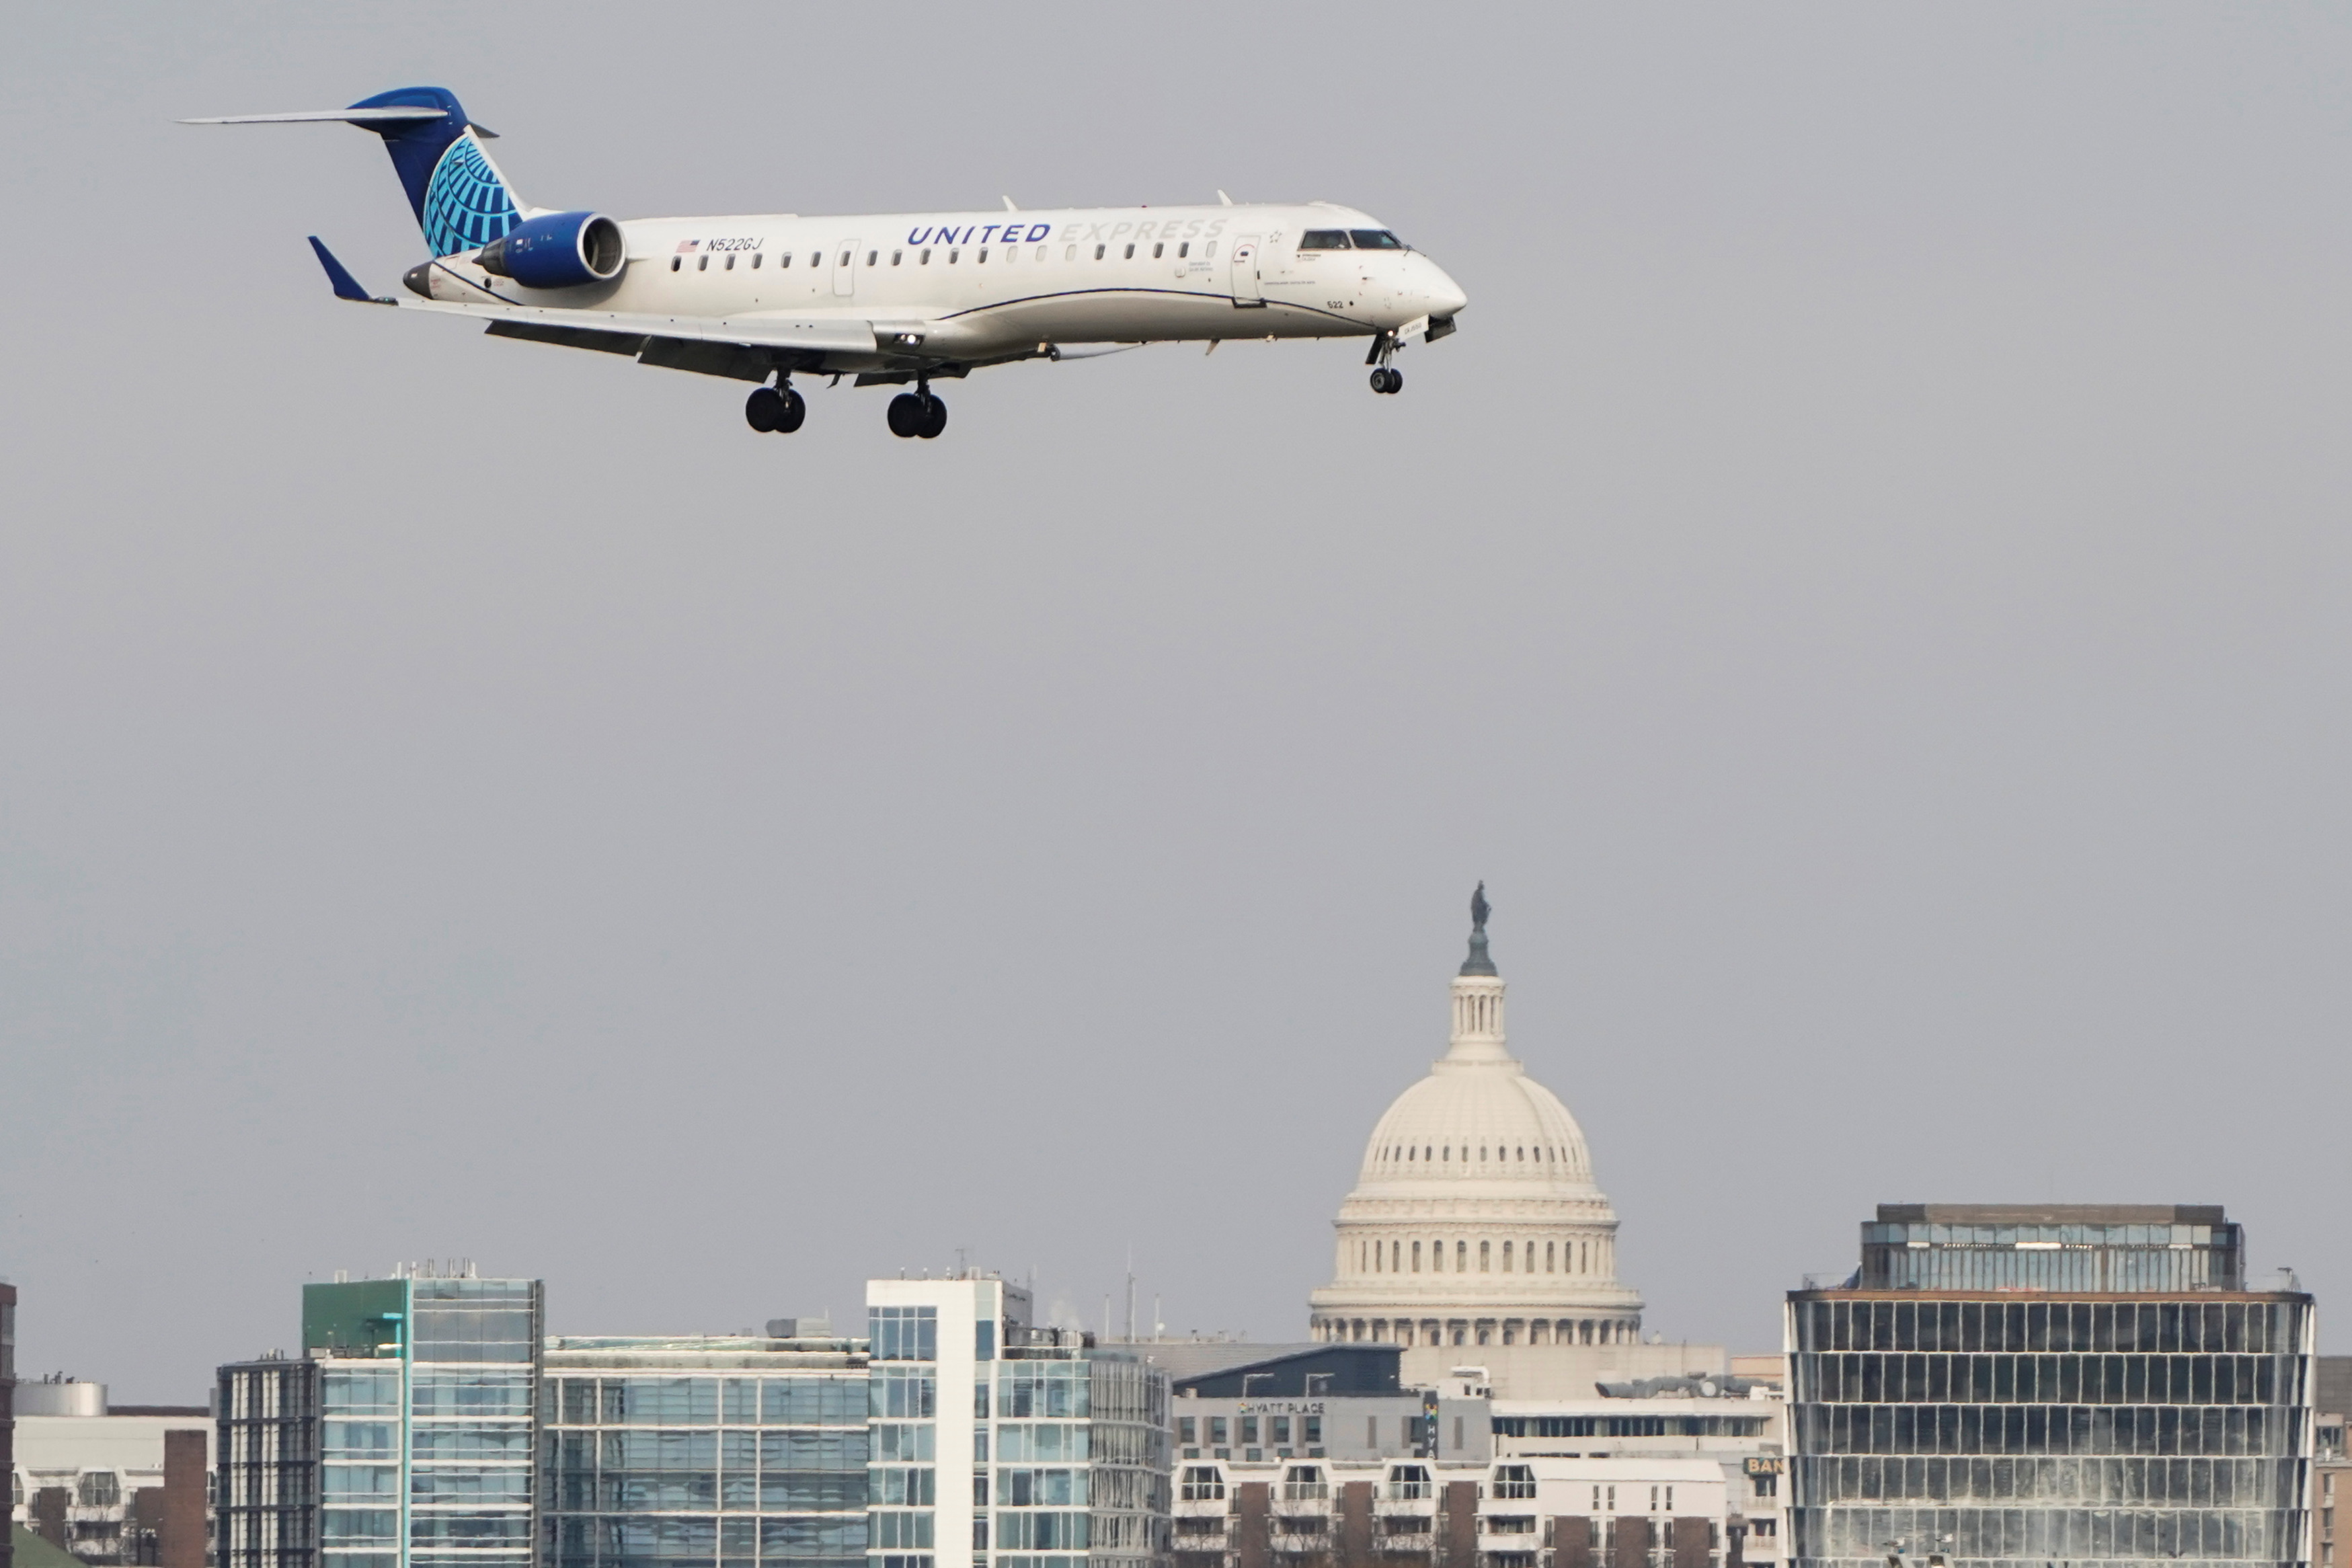 A United Airlines aircraft lands at Reagan National Airport in Arlington, Virginia